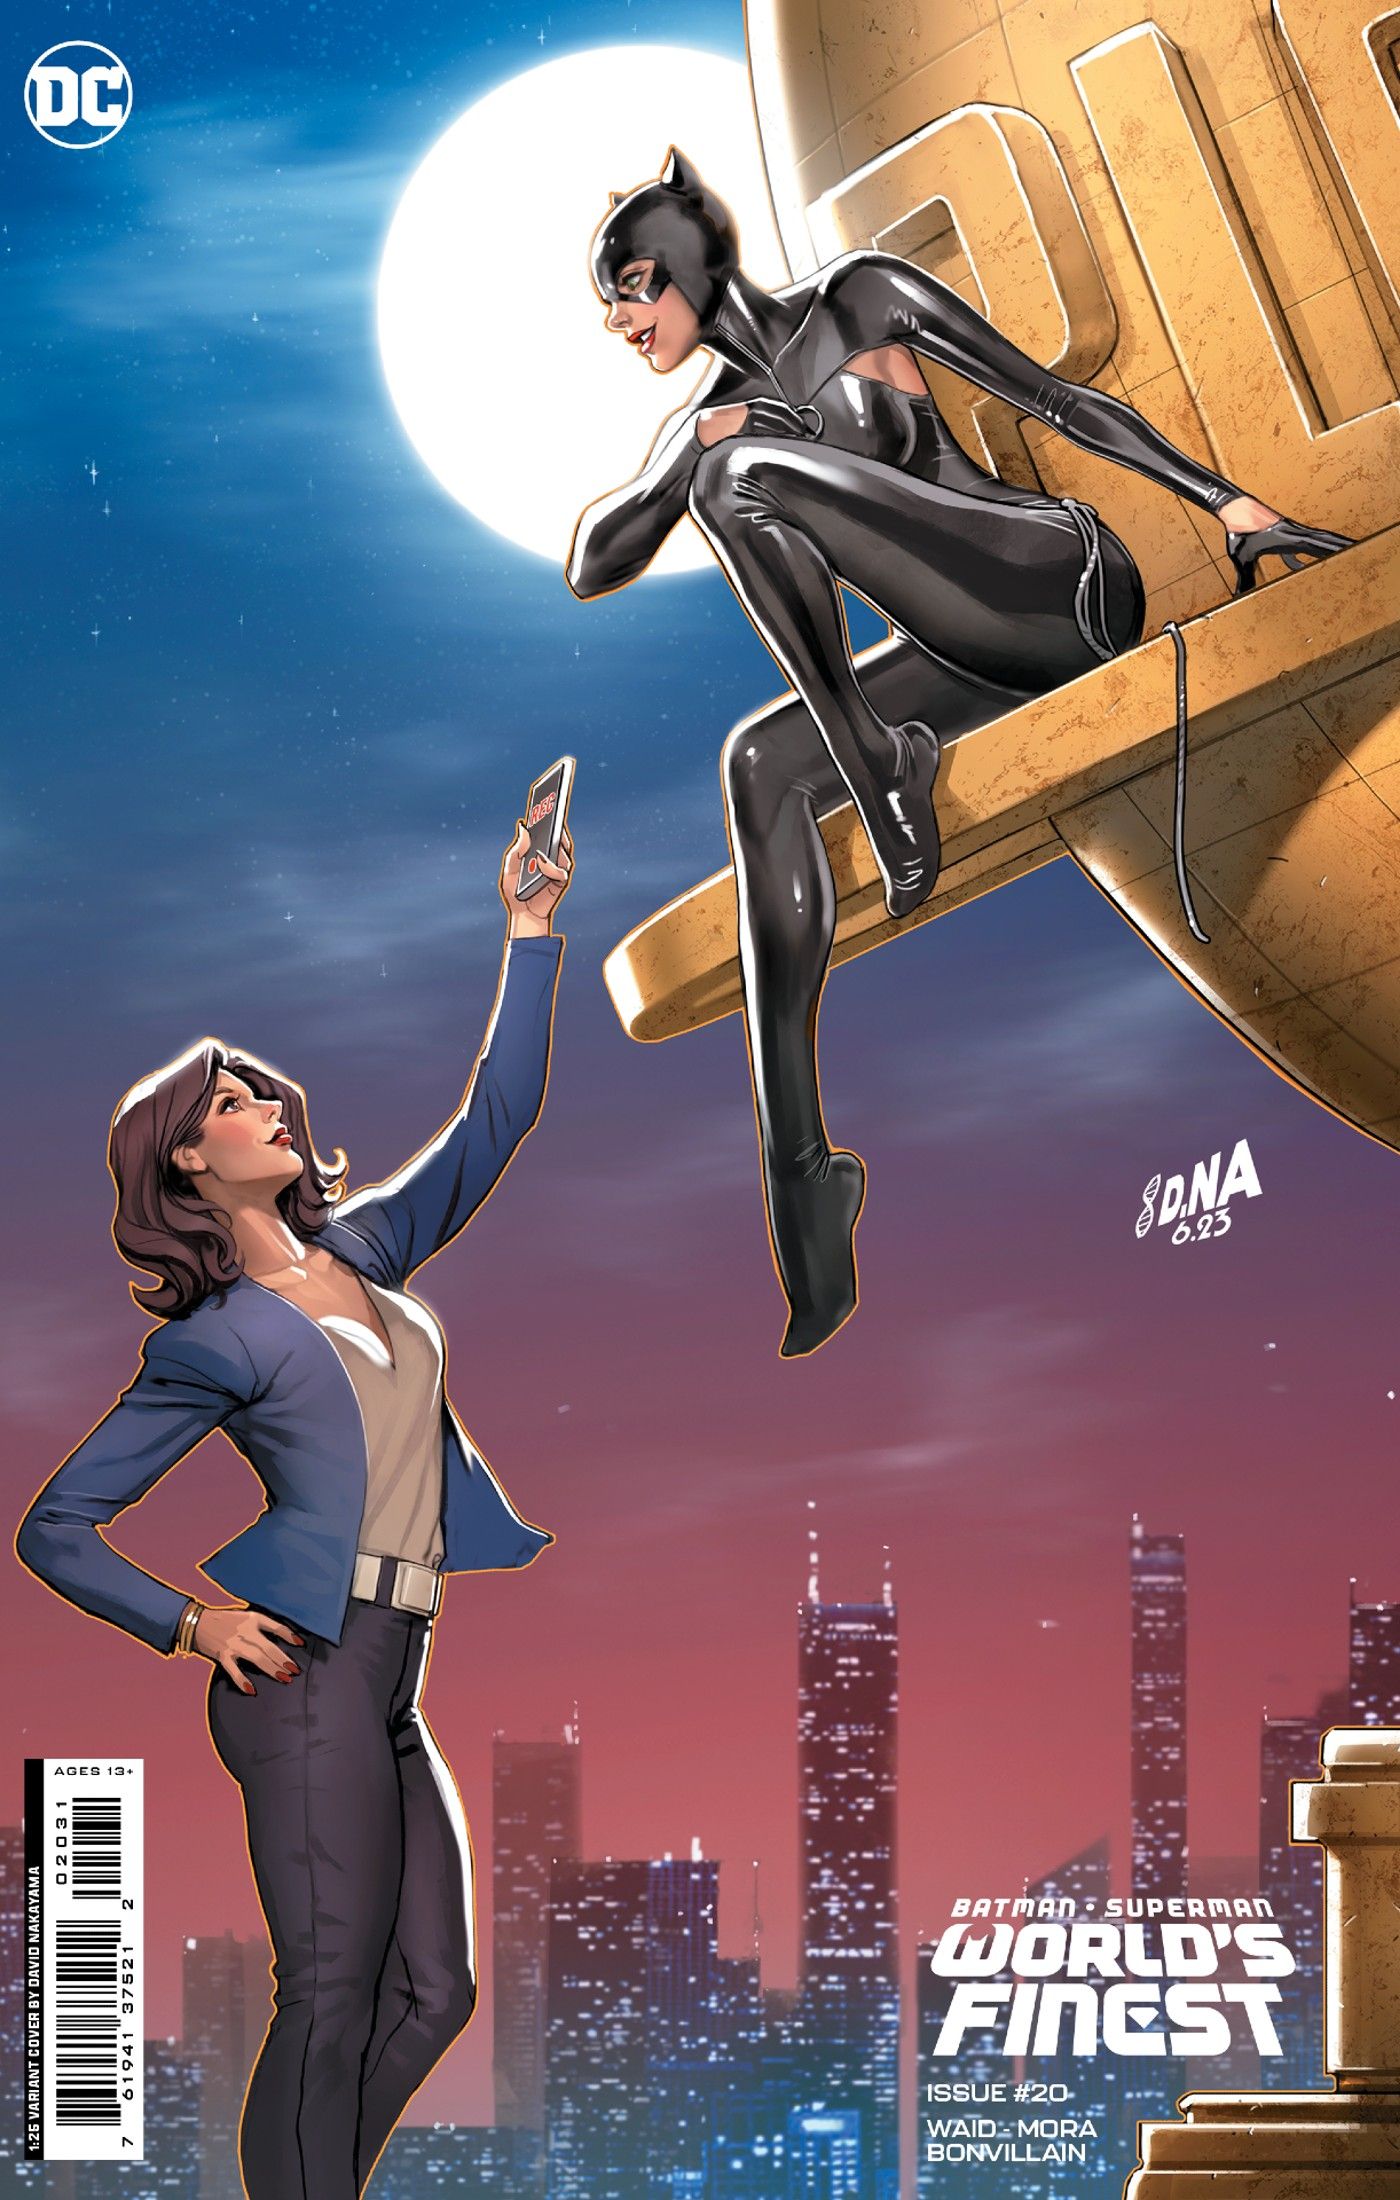 Batman Superman World's Finest #20 featuring Kingdom Come cover art-3